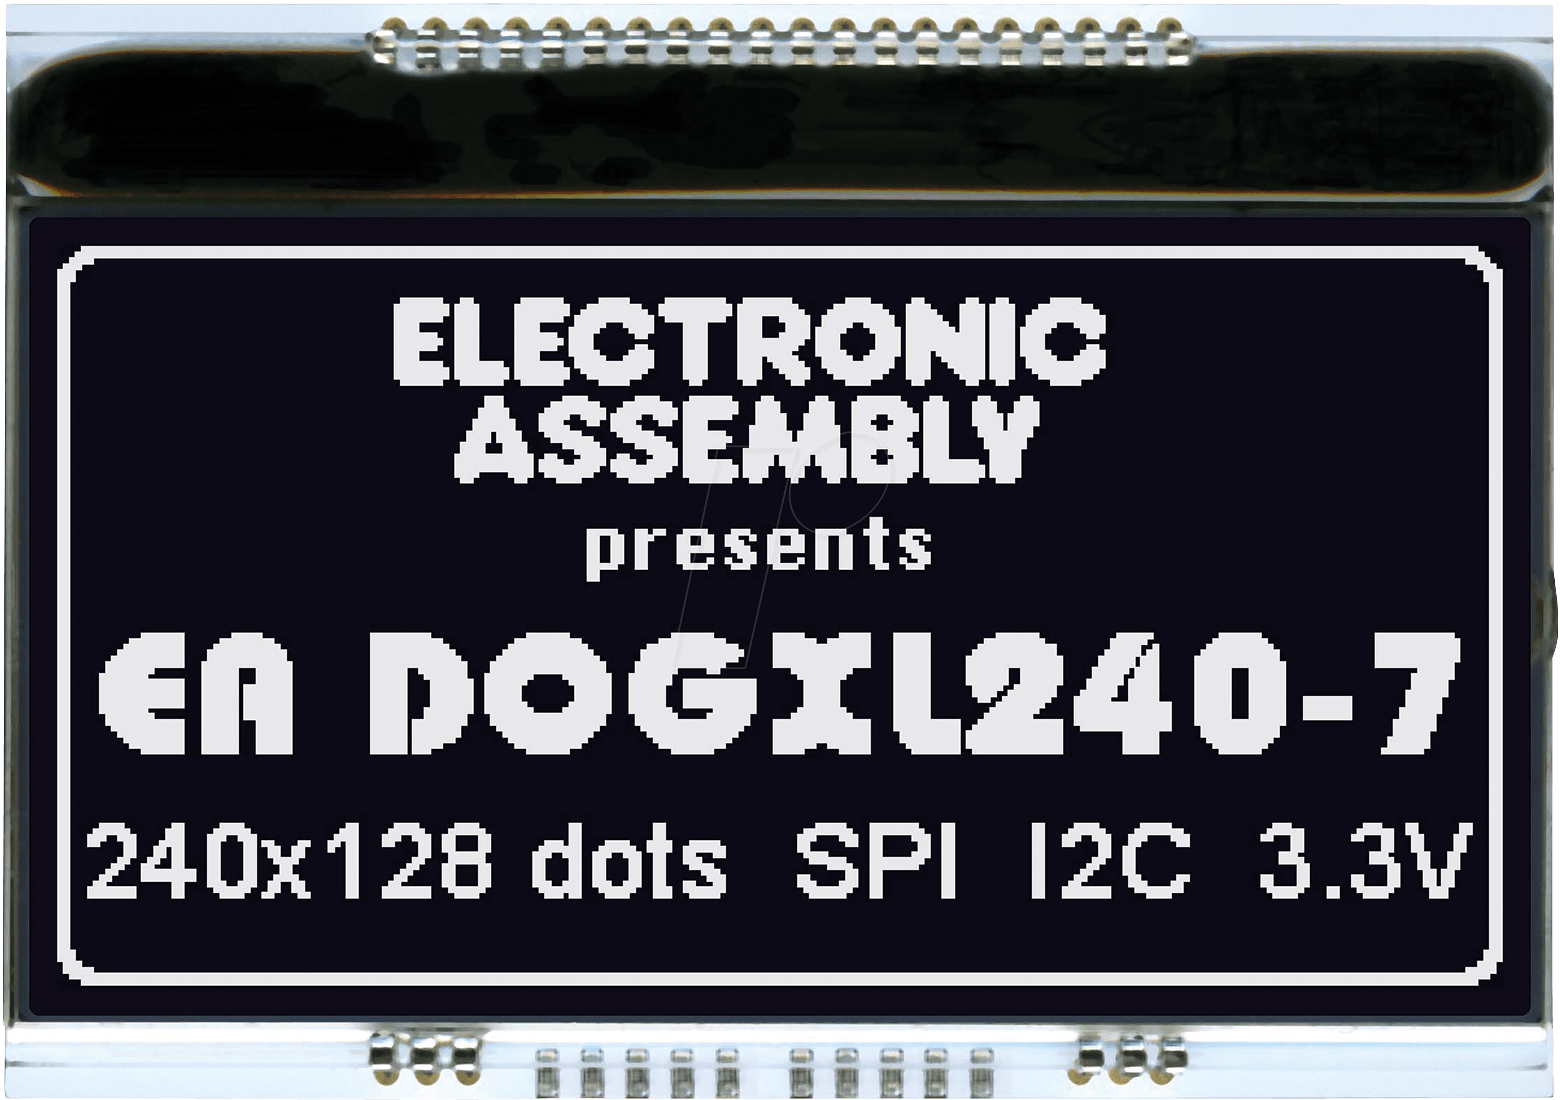 EA DOGXL240S-7 - Grafikmodul mit Display-RAM, 84 x 42,9 mm, 240x128 Dots, schwarz von DISPLAY VISIONS